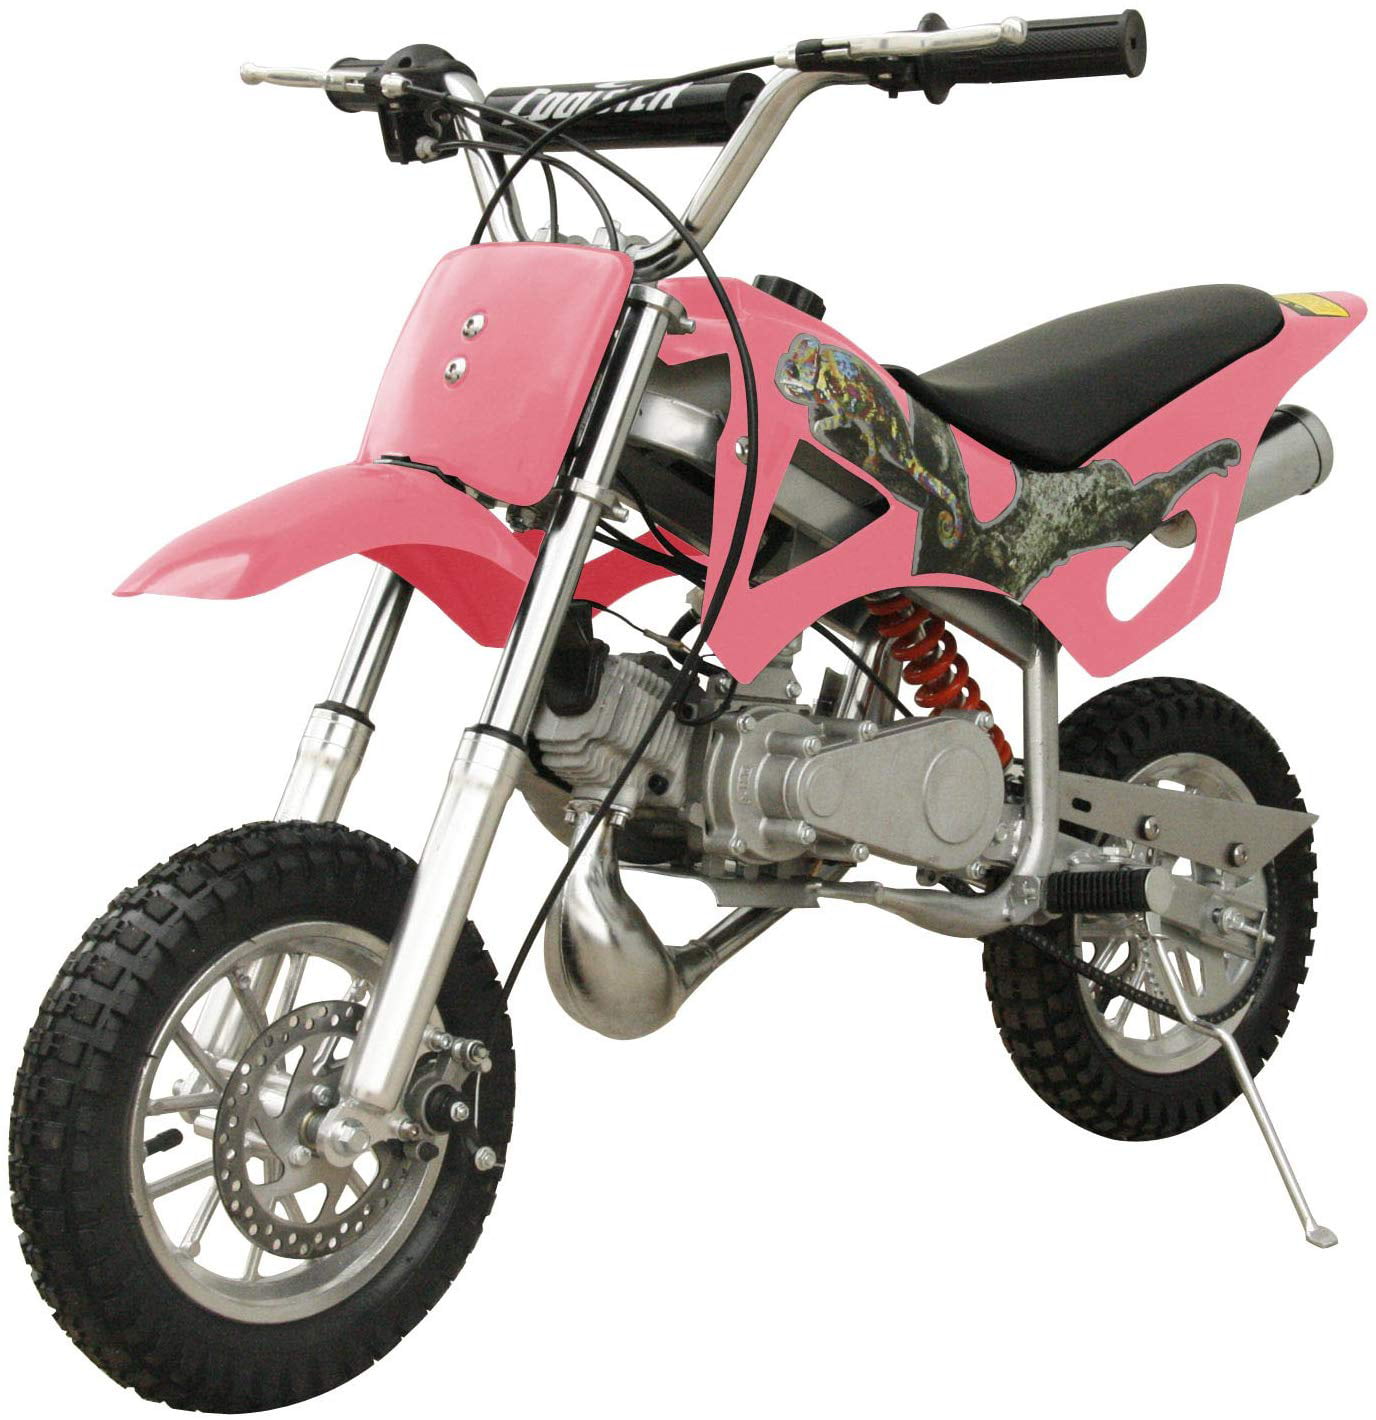 Kids 49cc 50cc Bike 2 Stroke Gas Motor Dirt Bike Mini Motorcycle Beginner Bike - Pink - Walmart